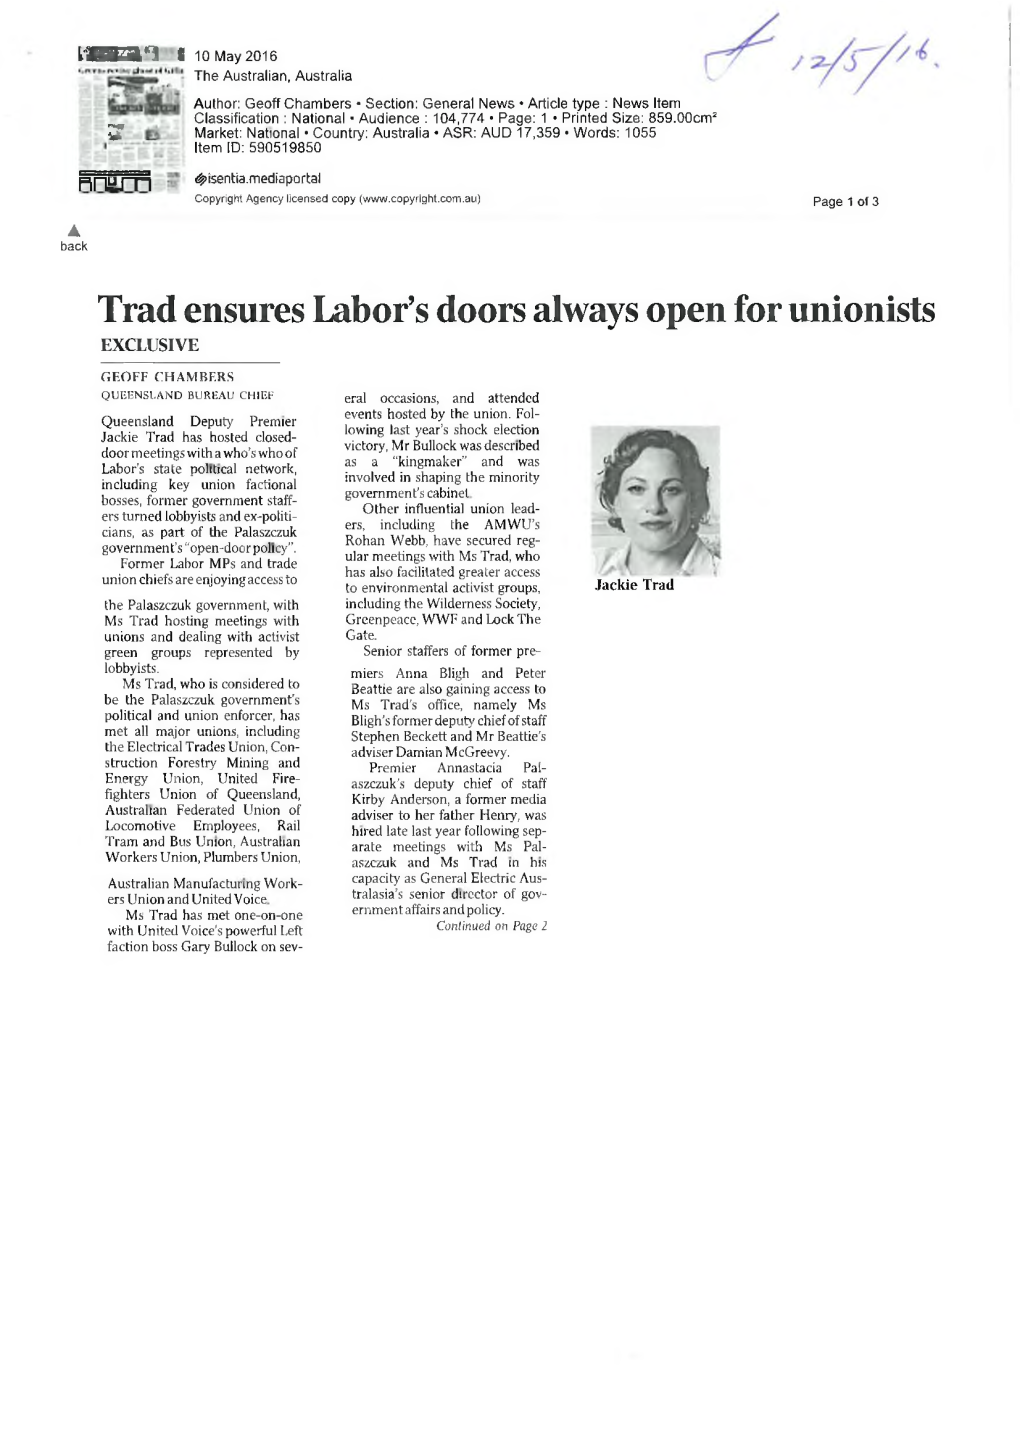 Trad Ensures Labor's Doors Always Open for Unionists